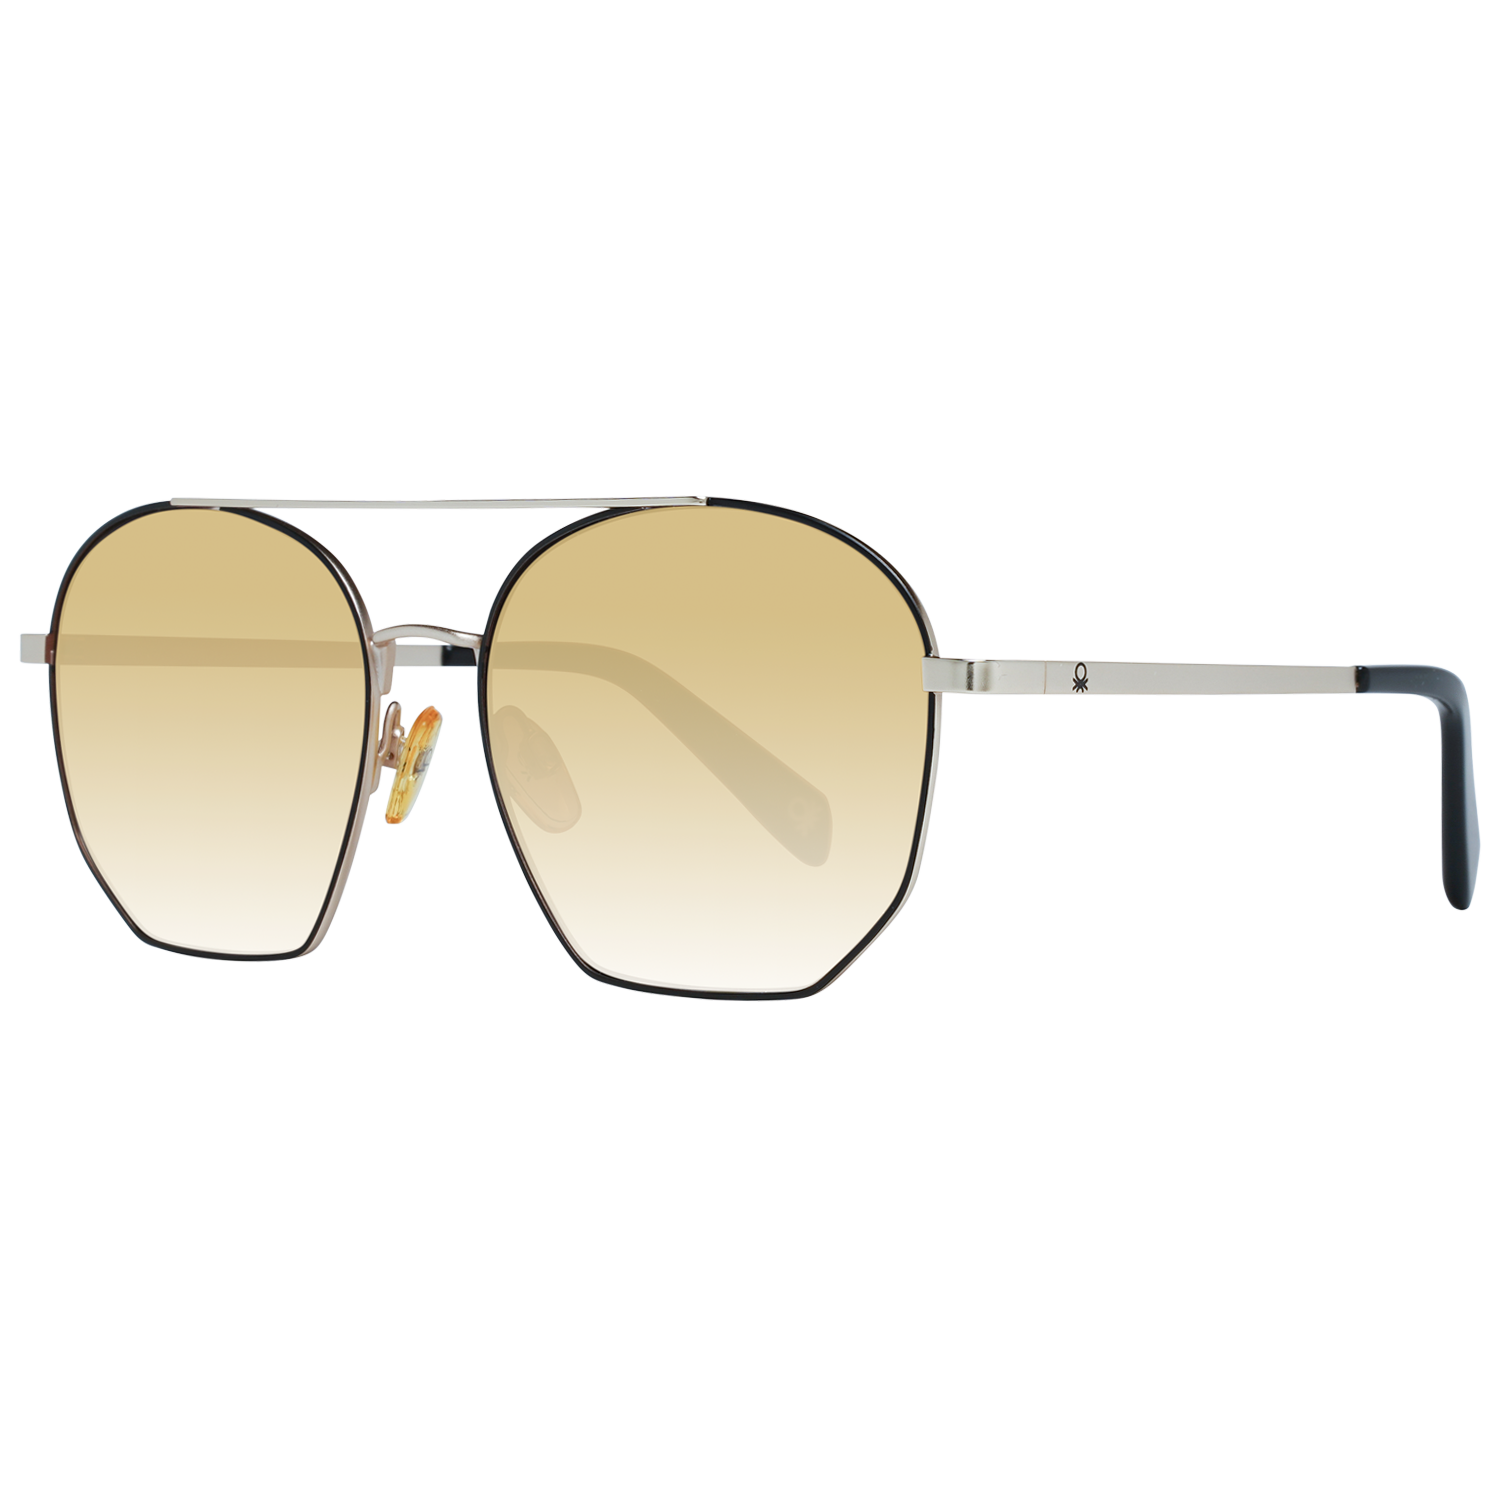 Benetton Sunglasses Benetton Sunglasses BE7032 2 55 Eyeglasses Eyewear UK USA Australia 